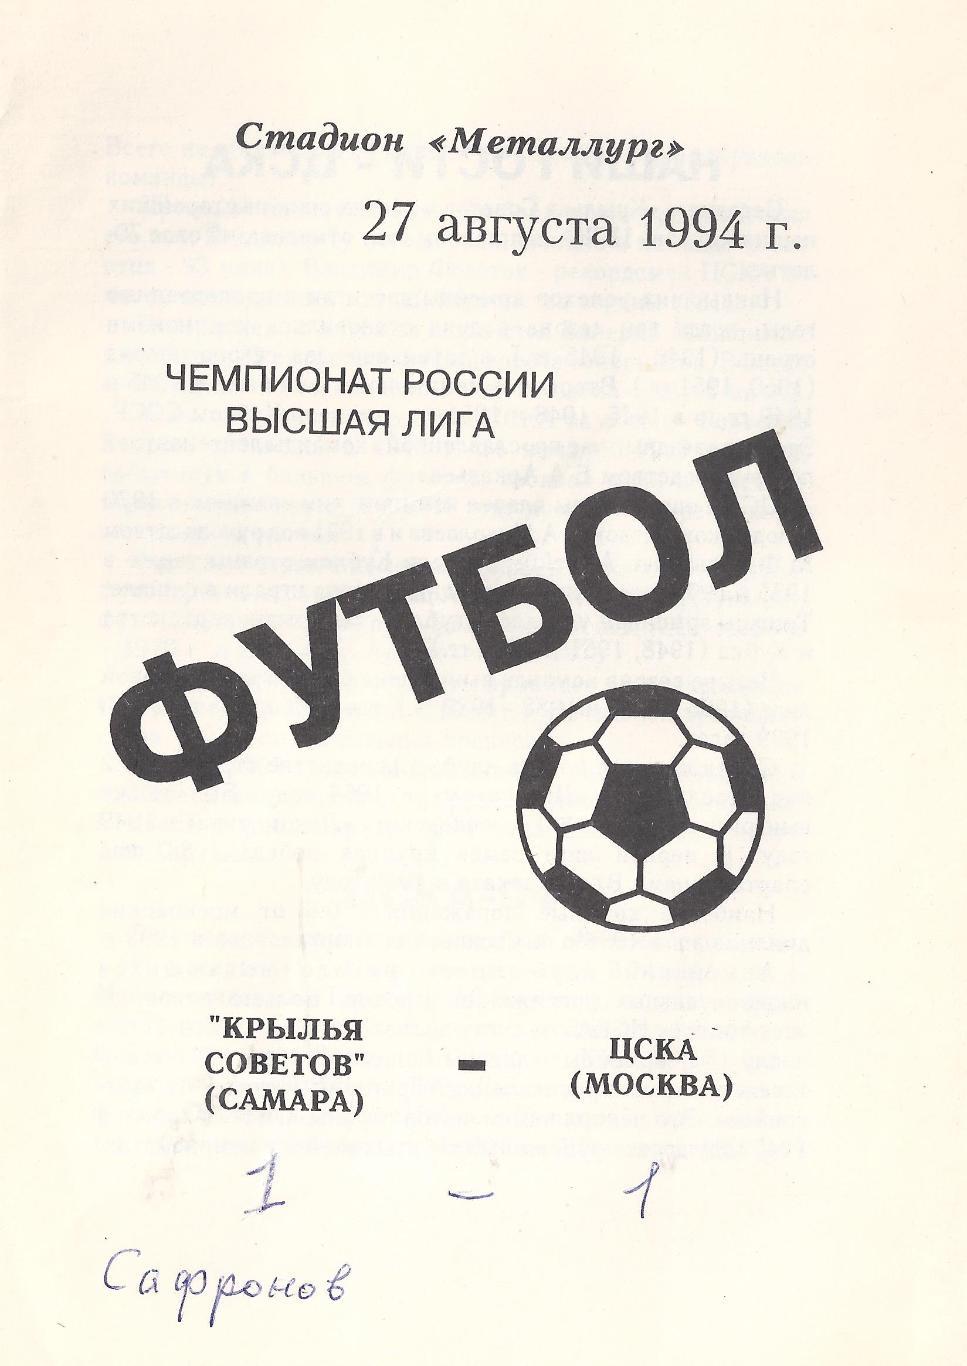 1994 - Крылья Советов Самара - ЦСКА Москва